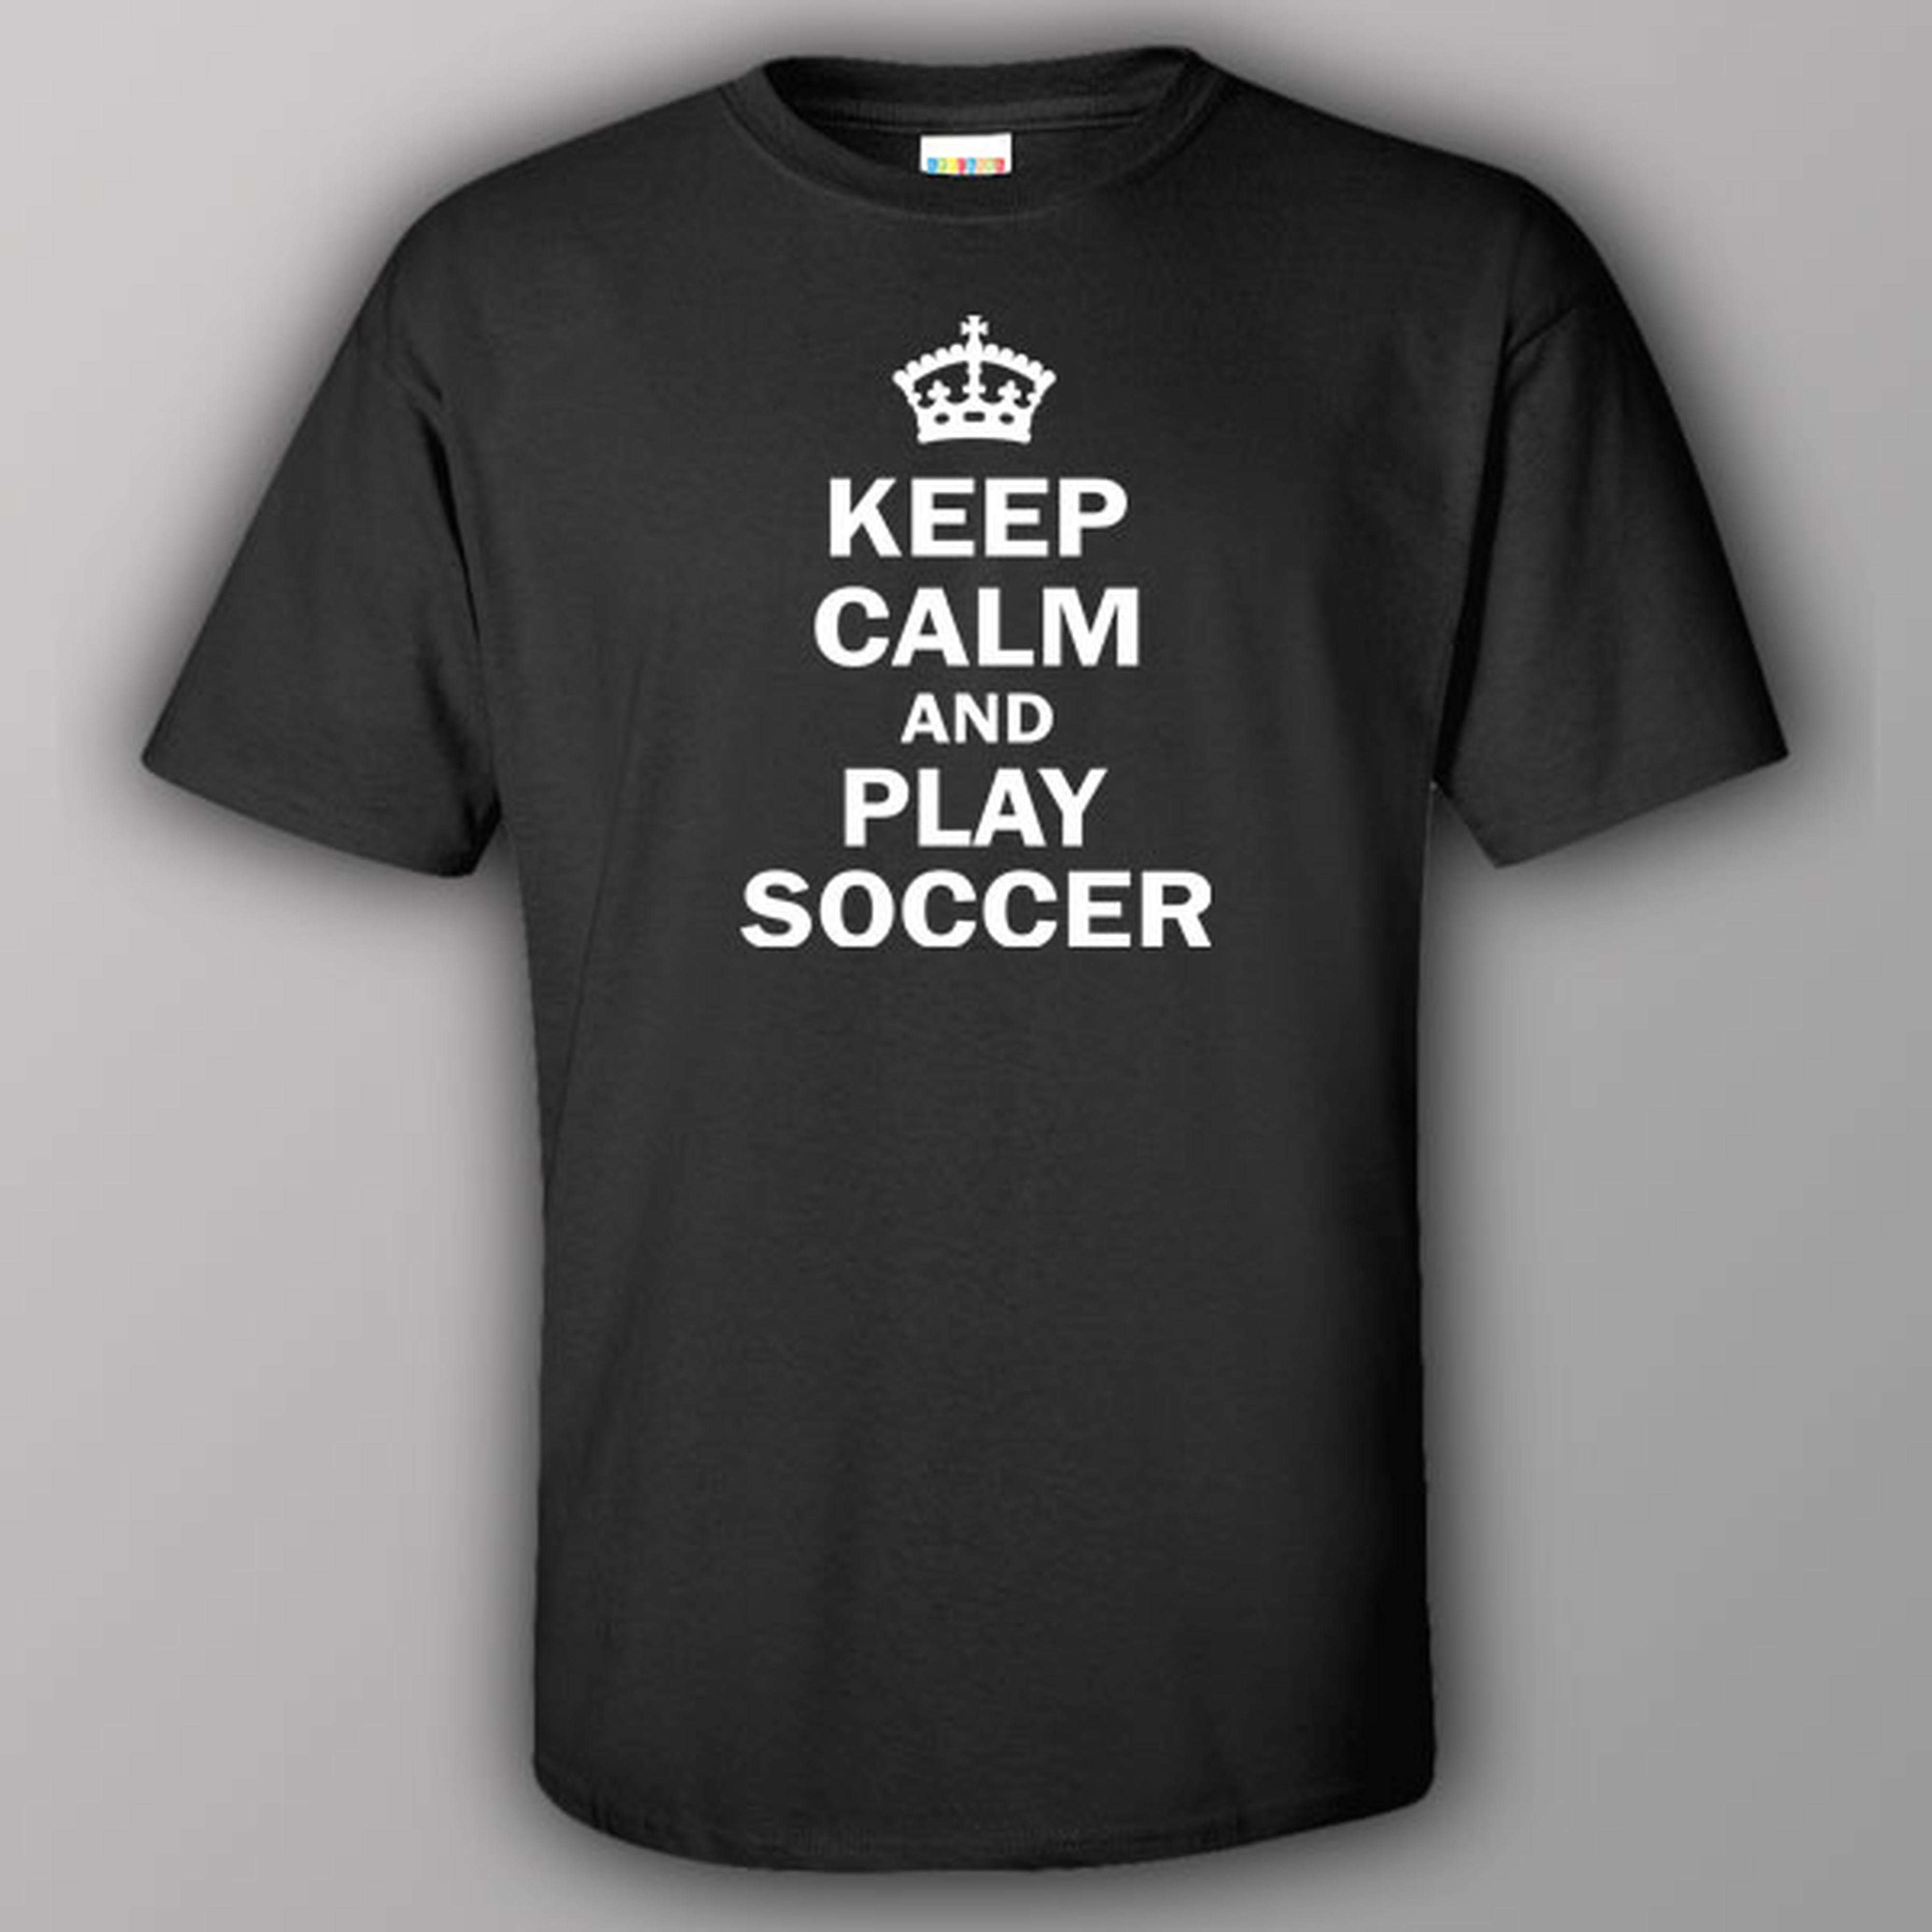 Keep calm and play soccer - T-shirt